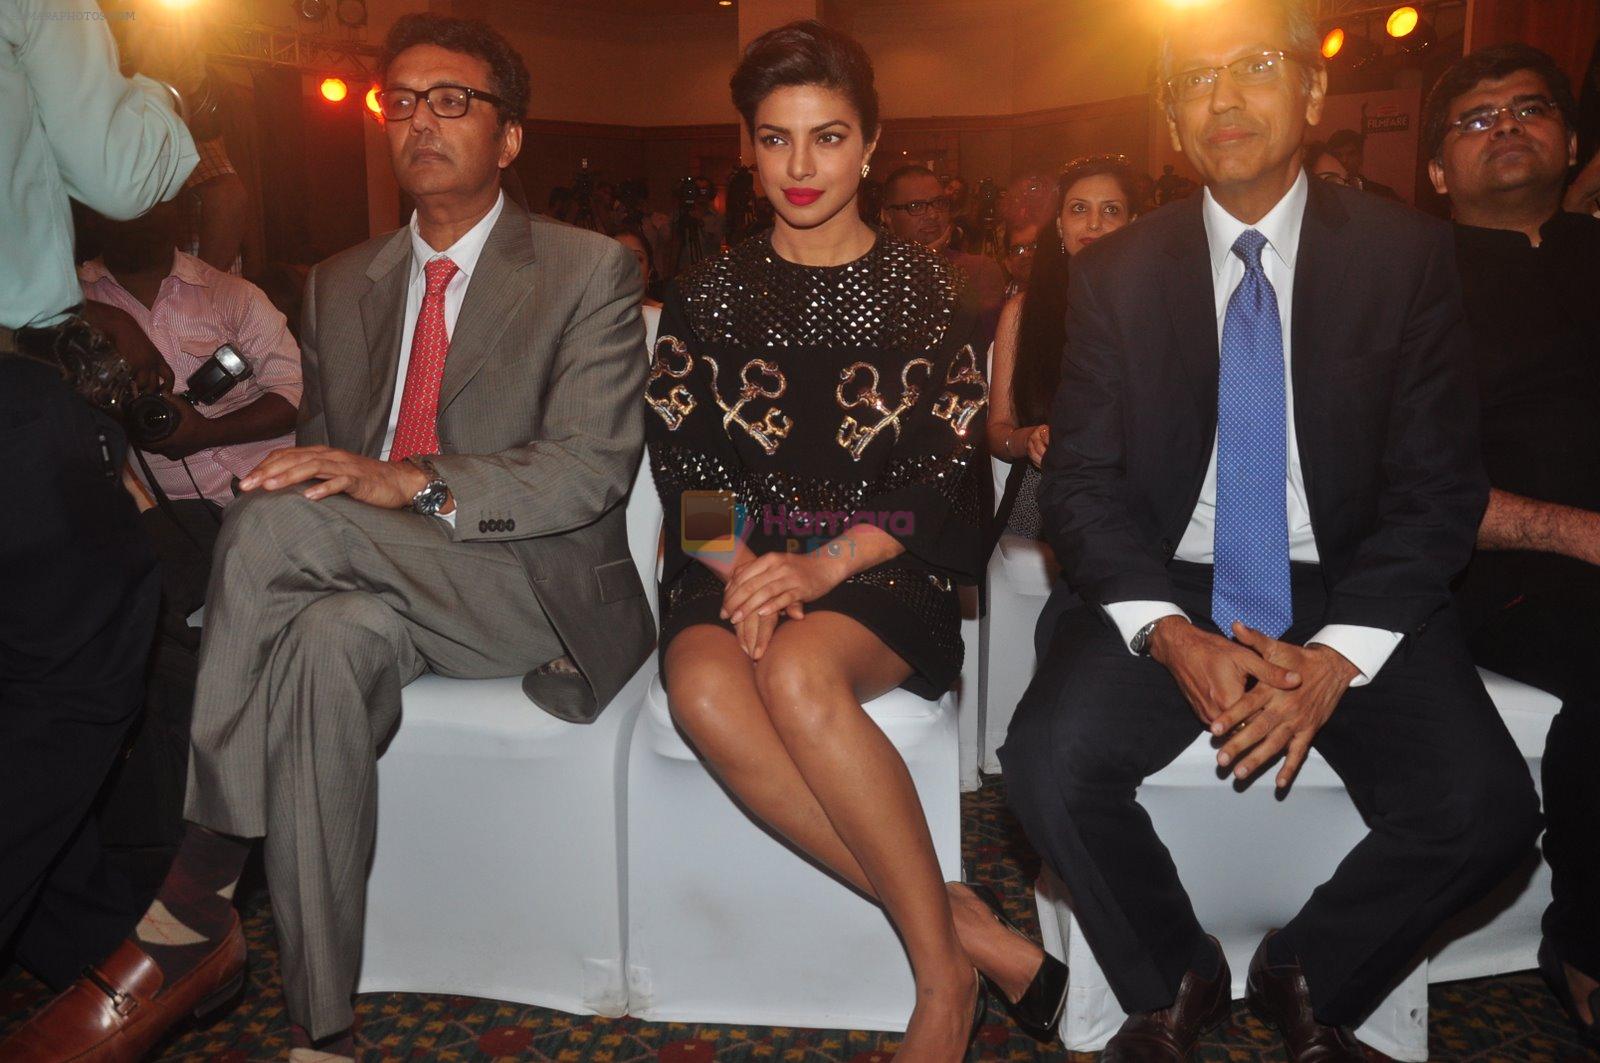 Priyanka Chopra launches new edition of filmfare awards in Mumbai on 7th Dec 2014